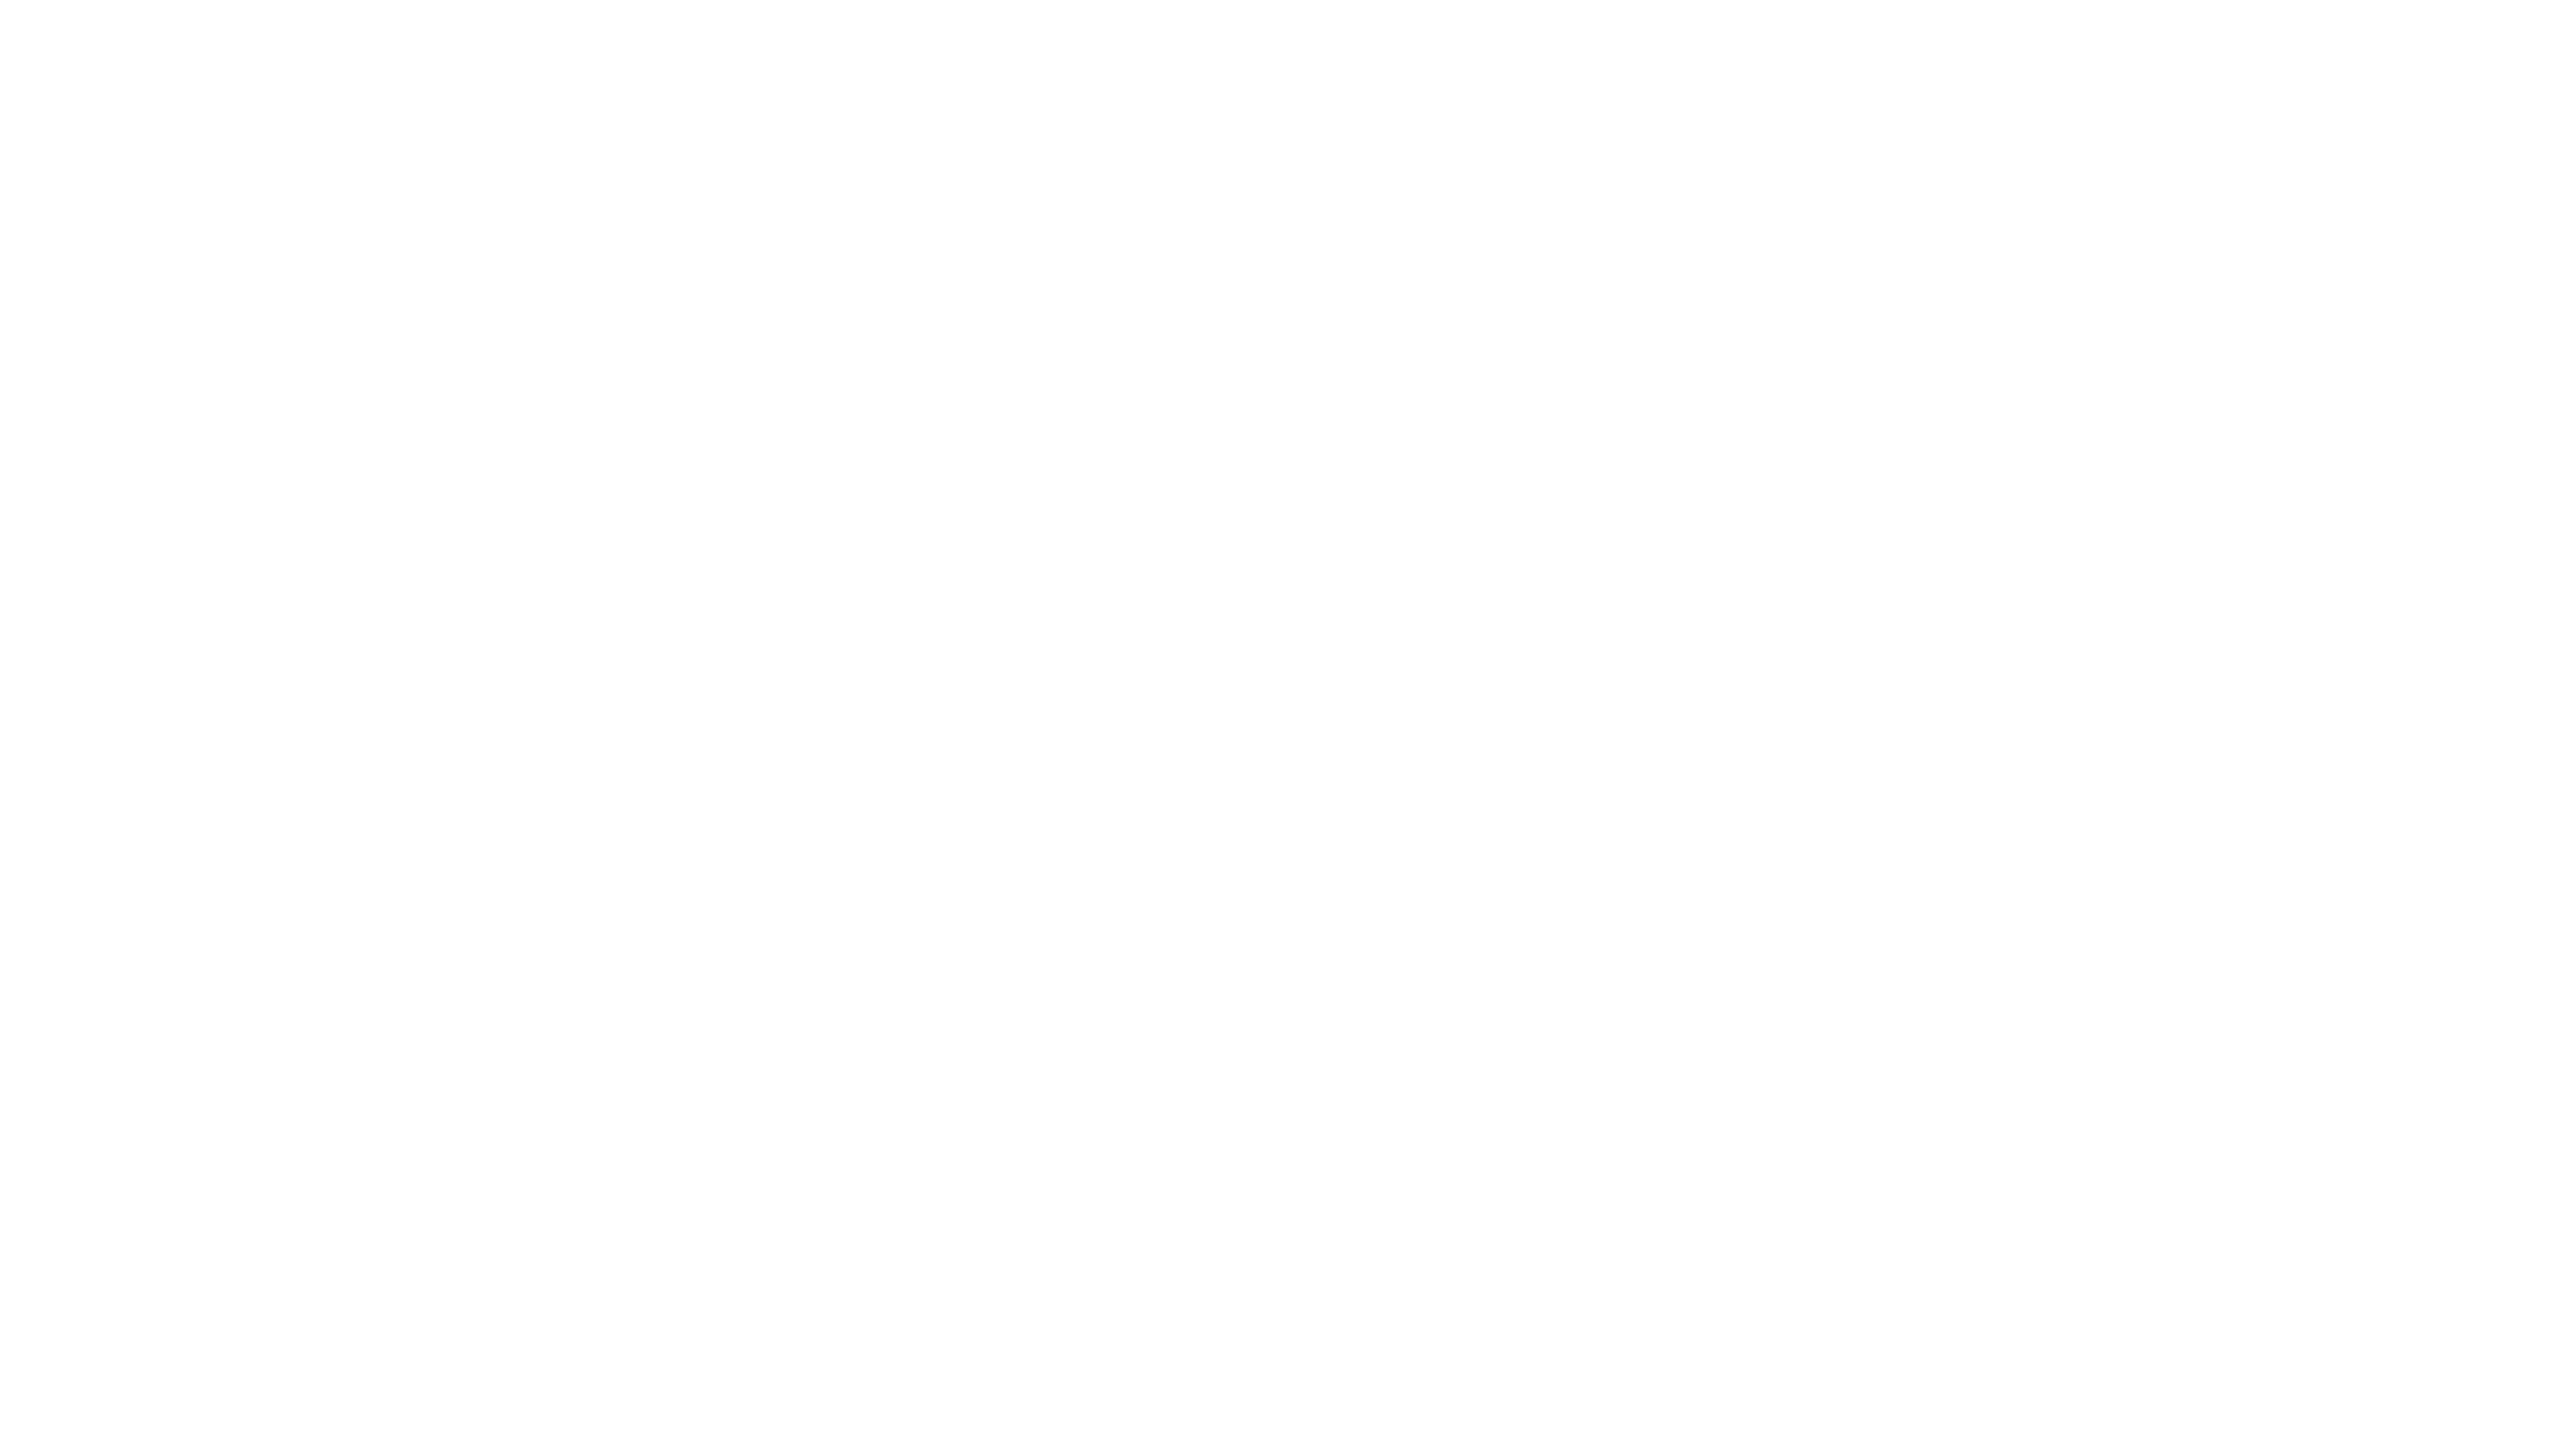 Phoenix Group logo white